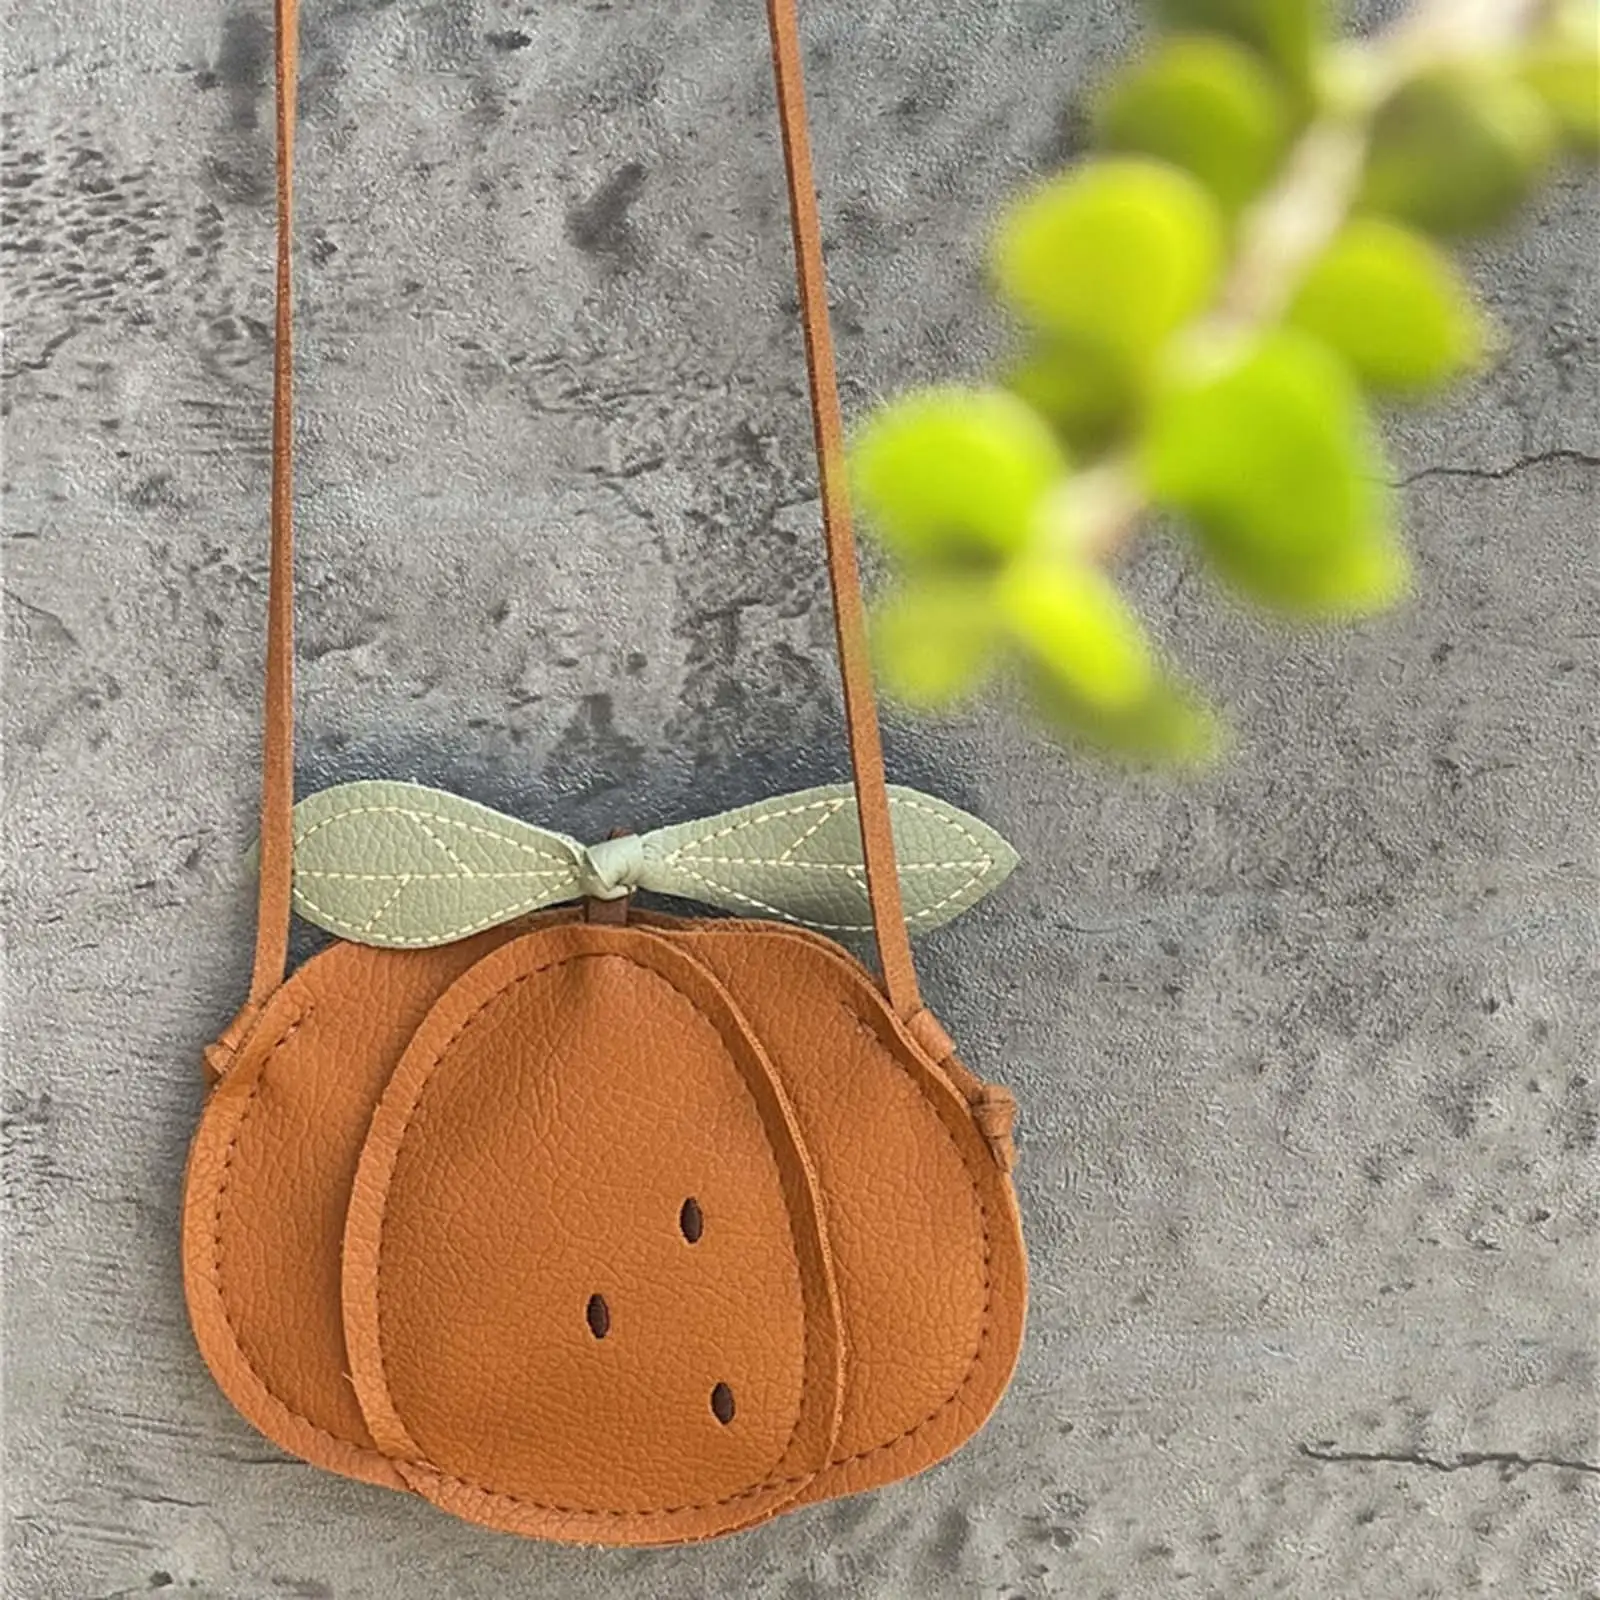 Cute Shoulder Bag Purse Mini PU Leather Handbags Gifts Shoulder Bag Messenger Bags for Daughter Women Girlfriend Friends Work